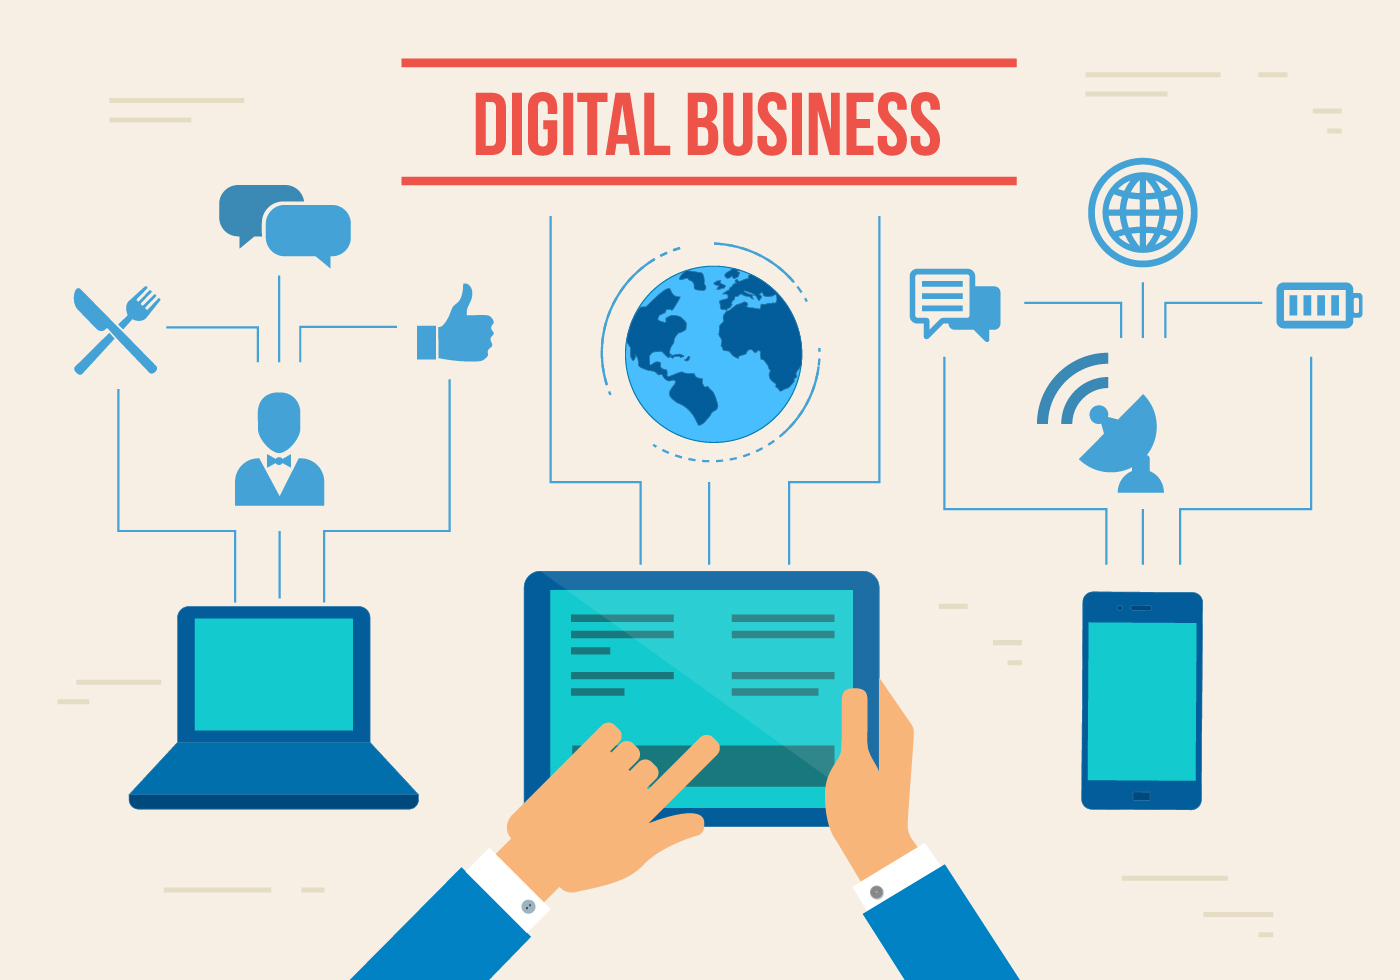 Digital Business Fundamentals 101